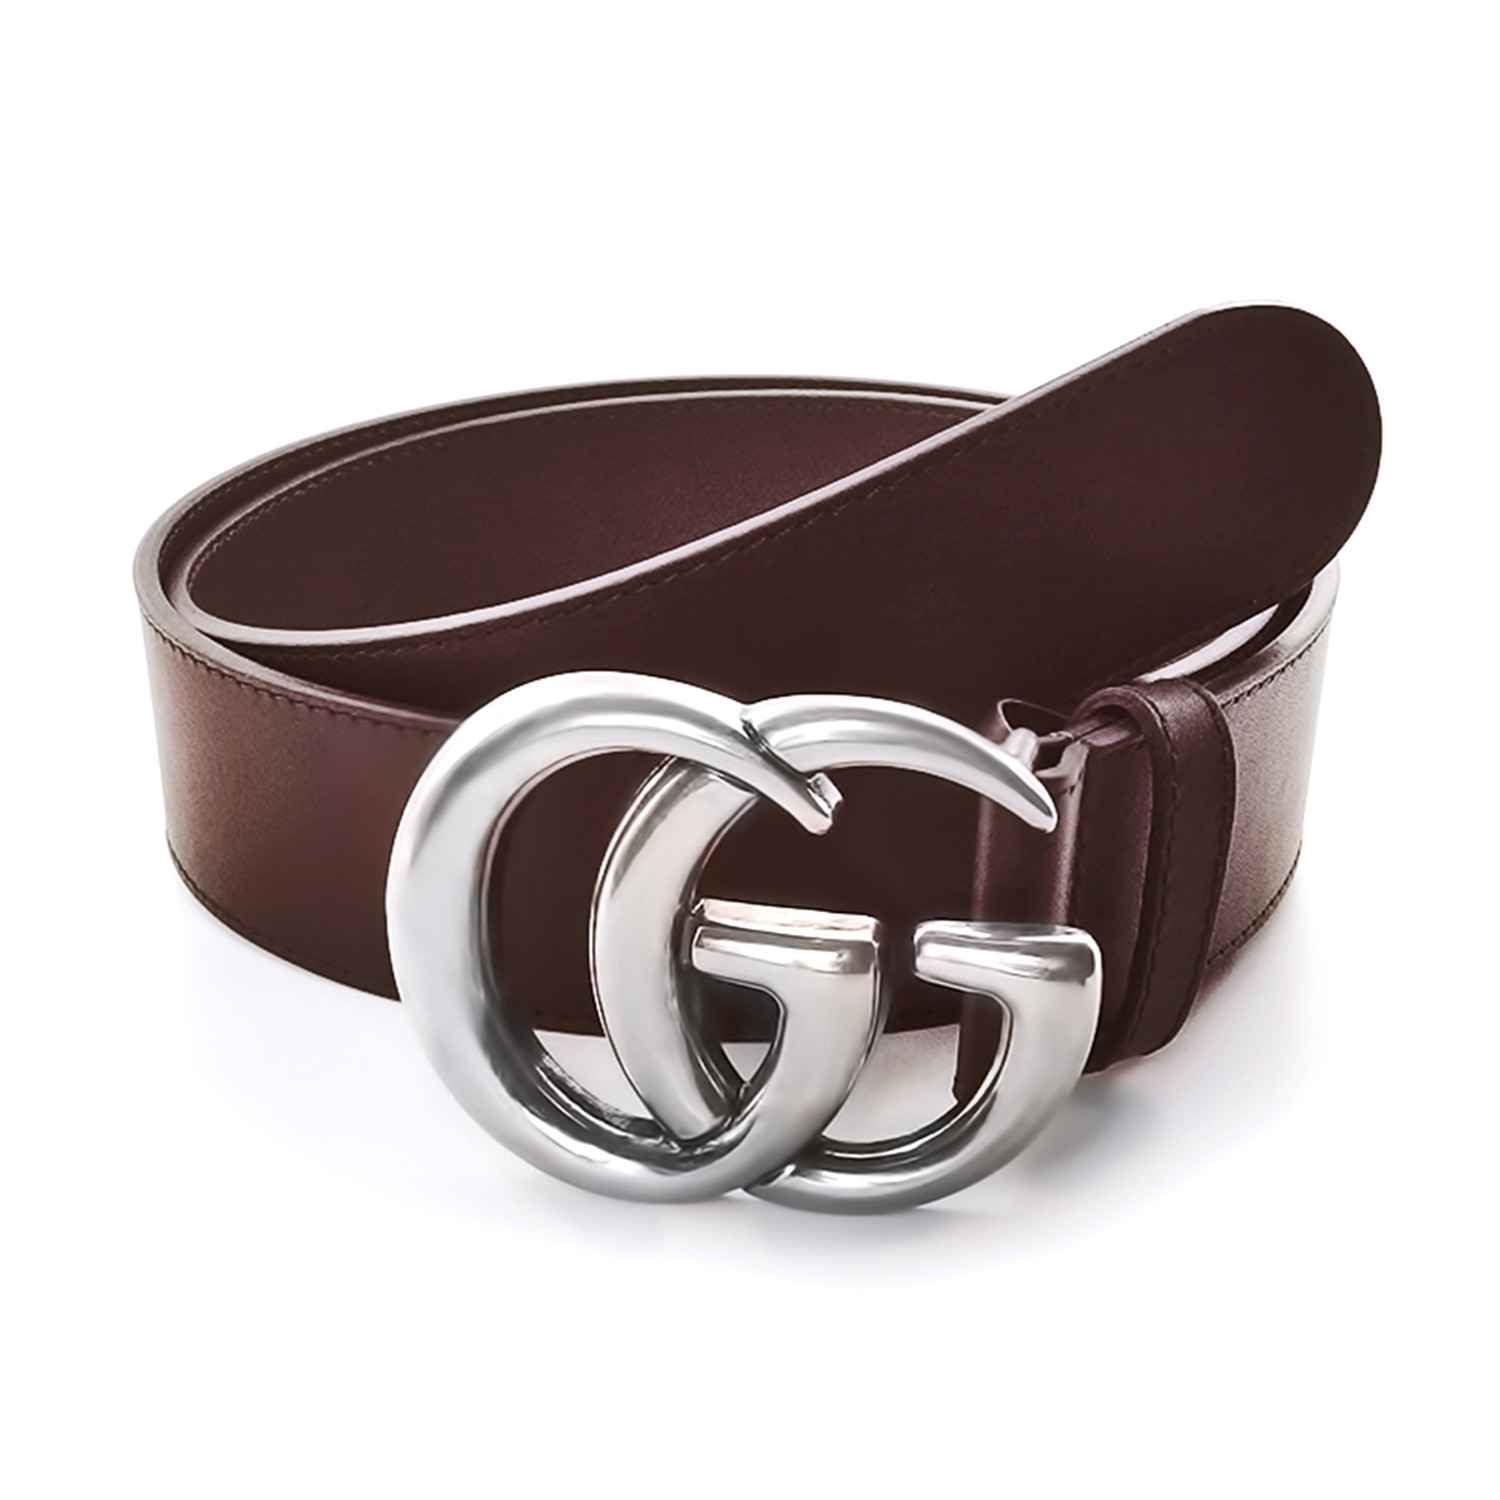 gg silver belt